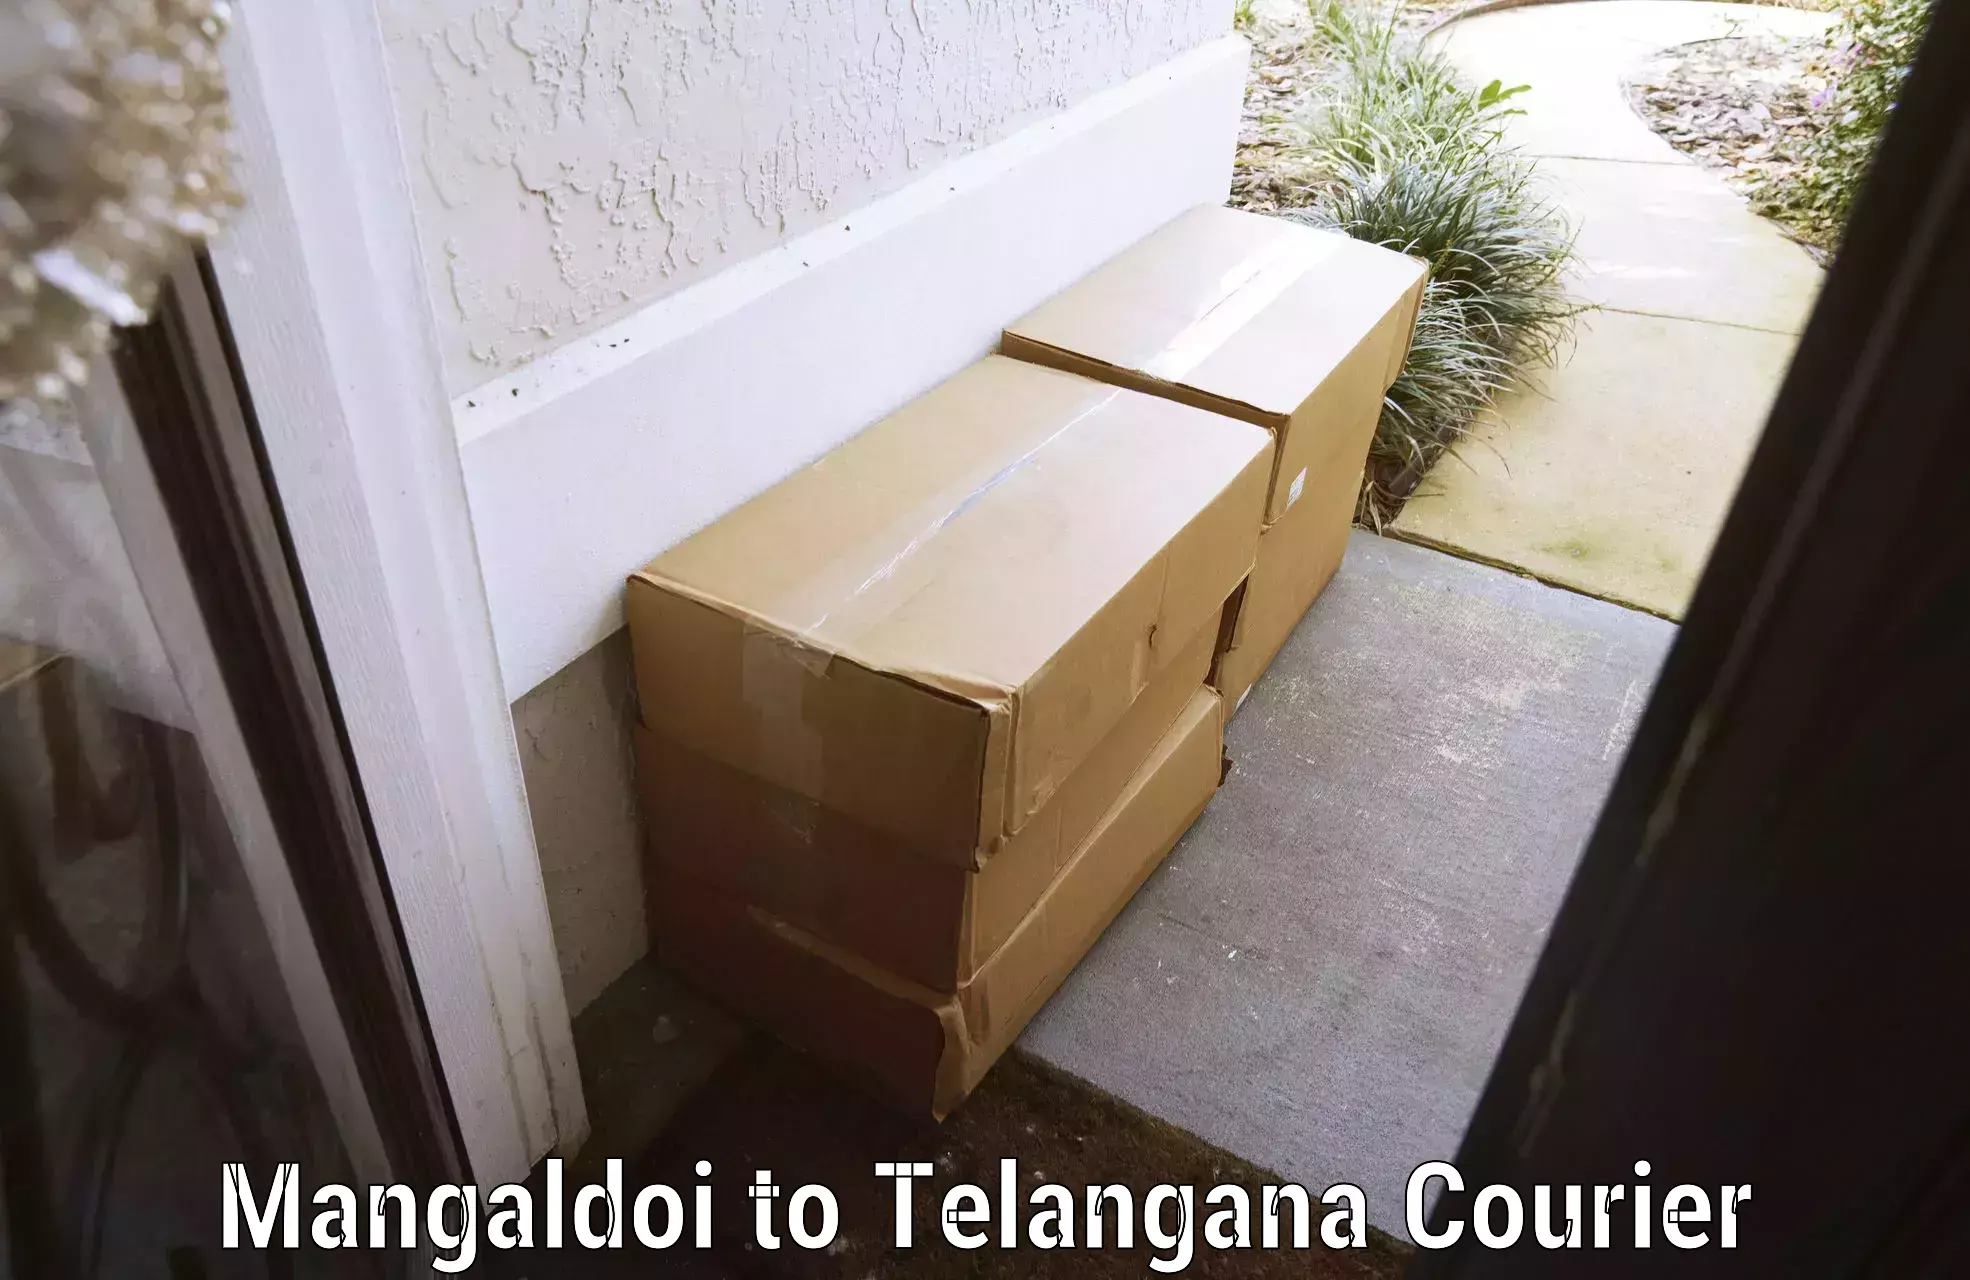 Luggage shipment specialists Mangaldoi to Hyderabad